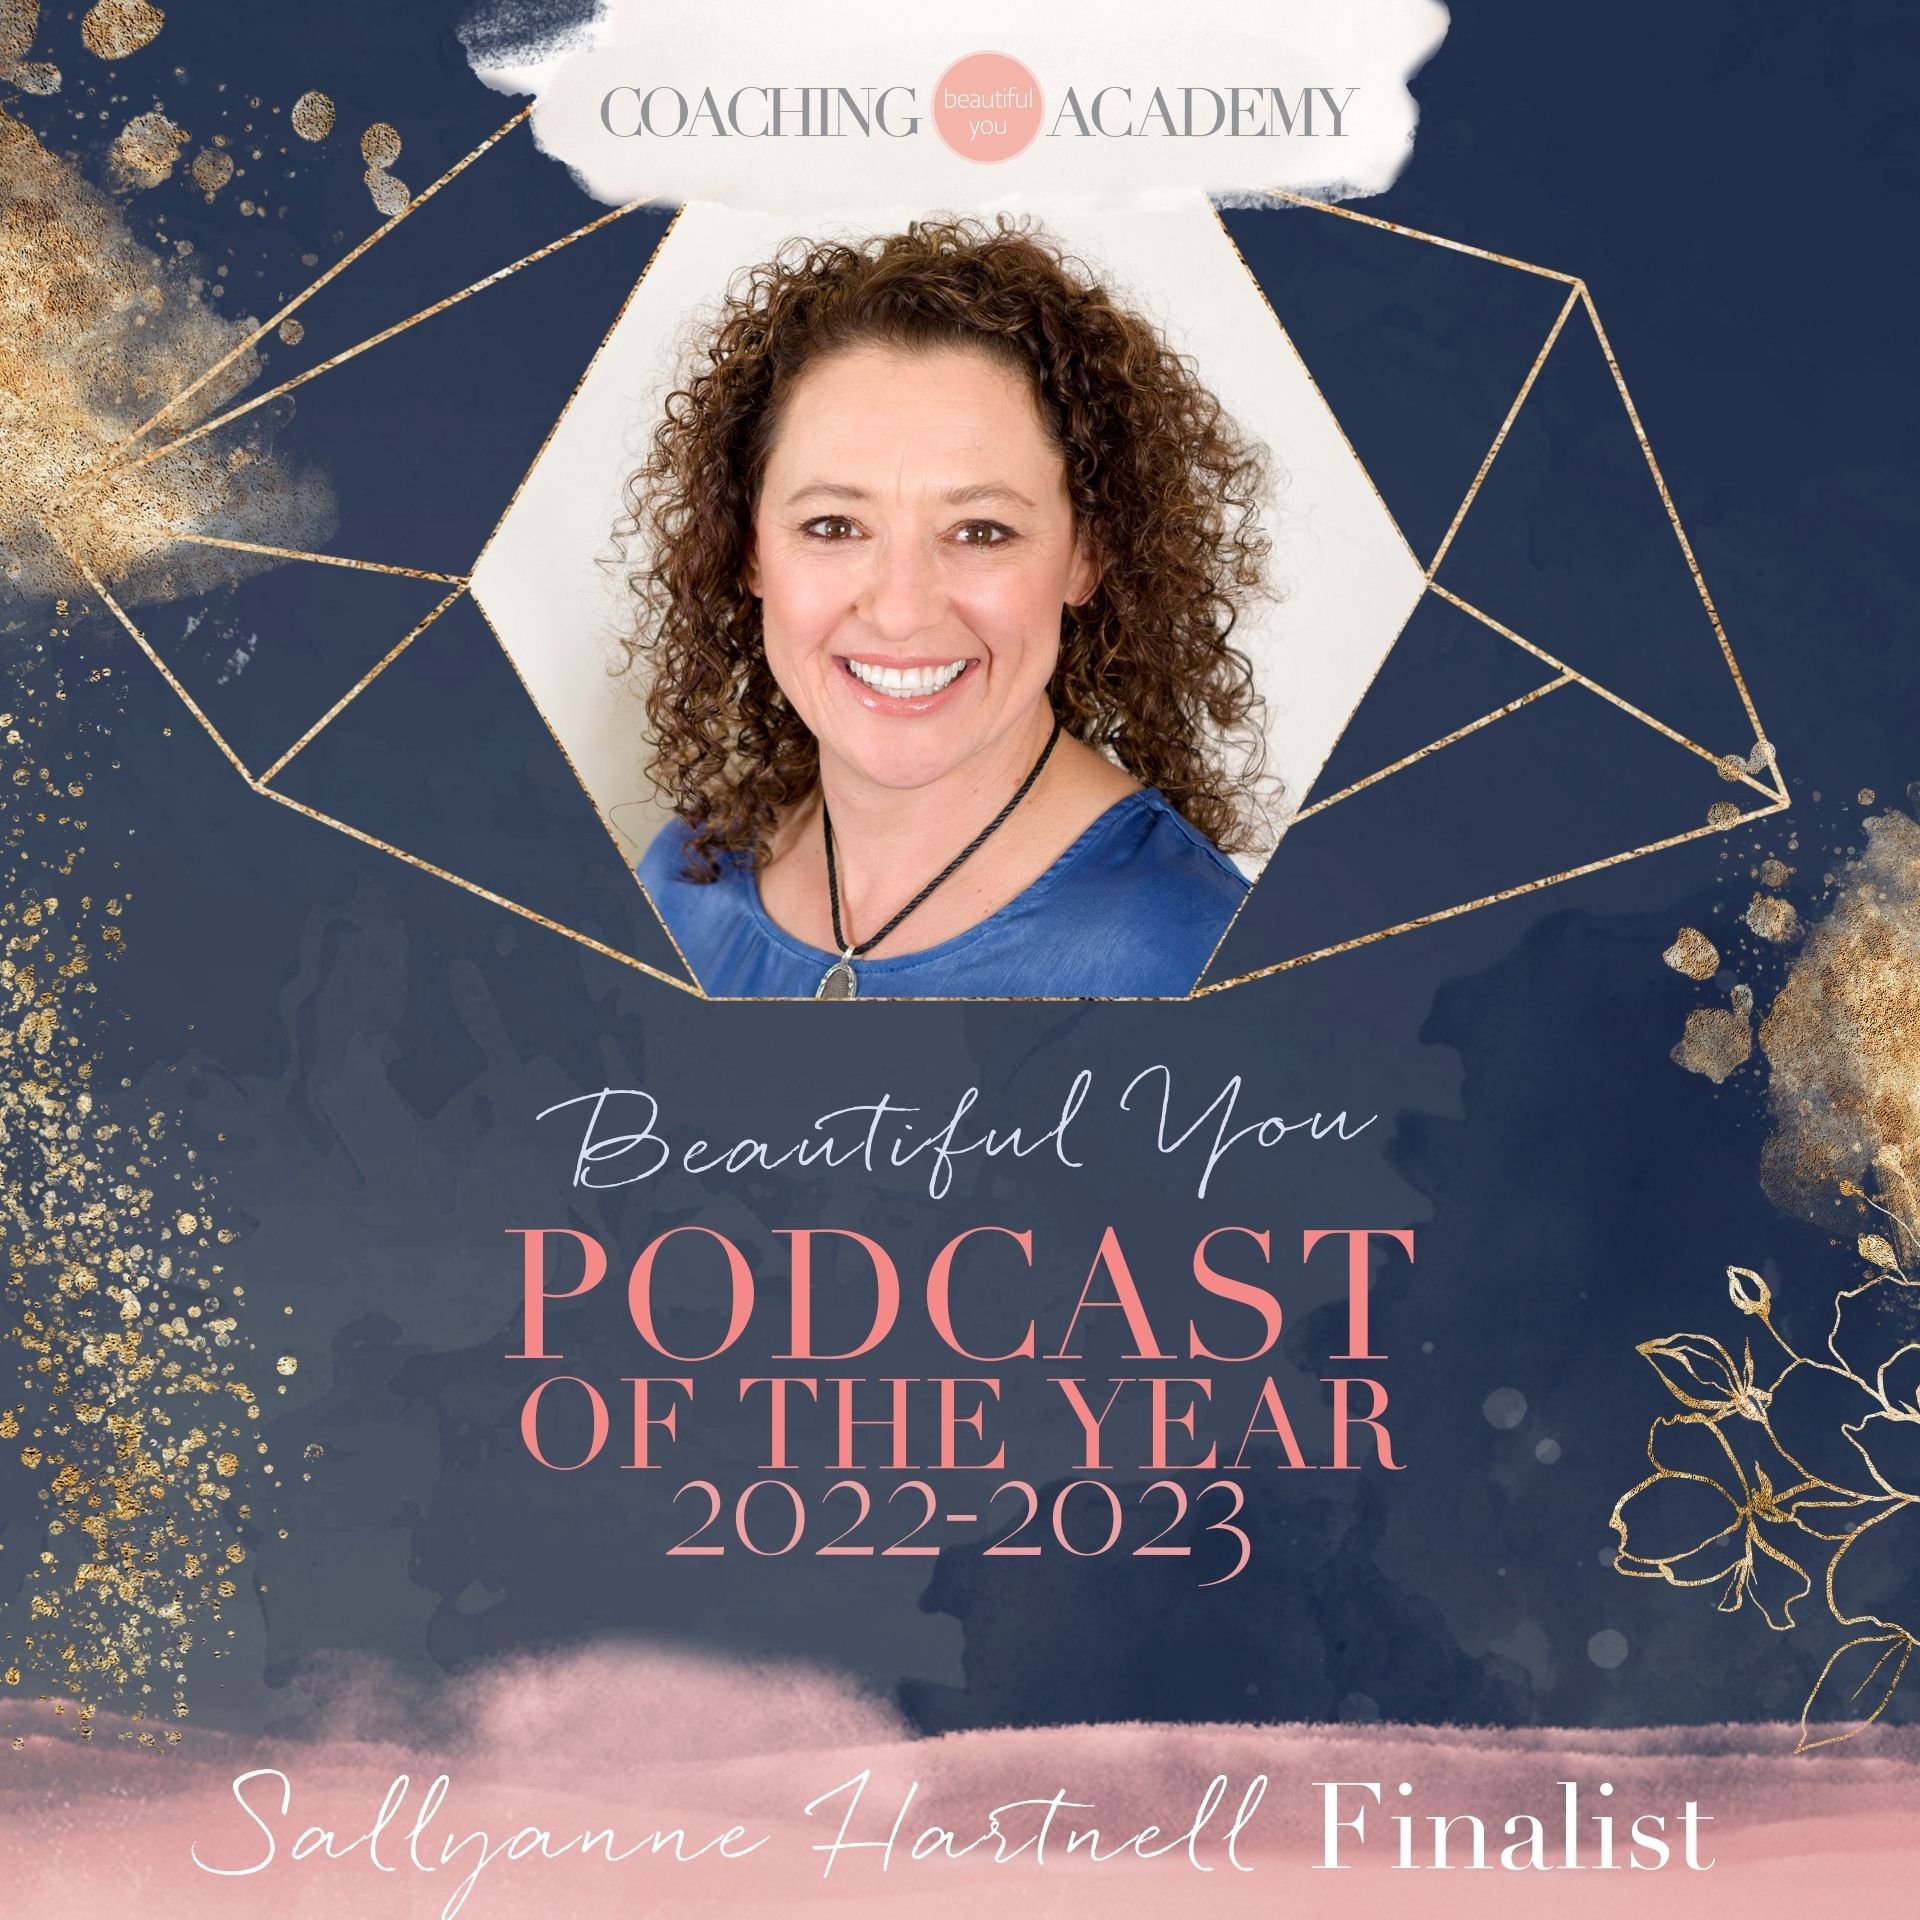 Podcast of the Year Award Finalist Sallyanne Hartnell.jpg